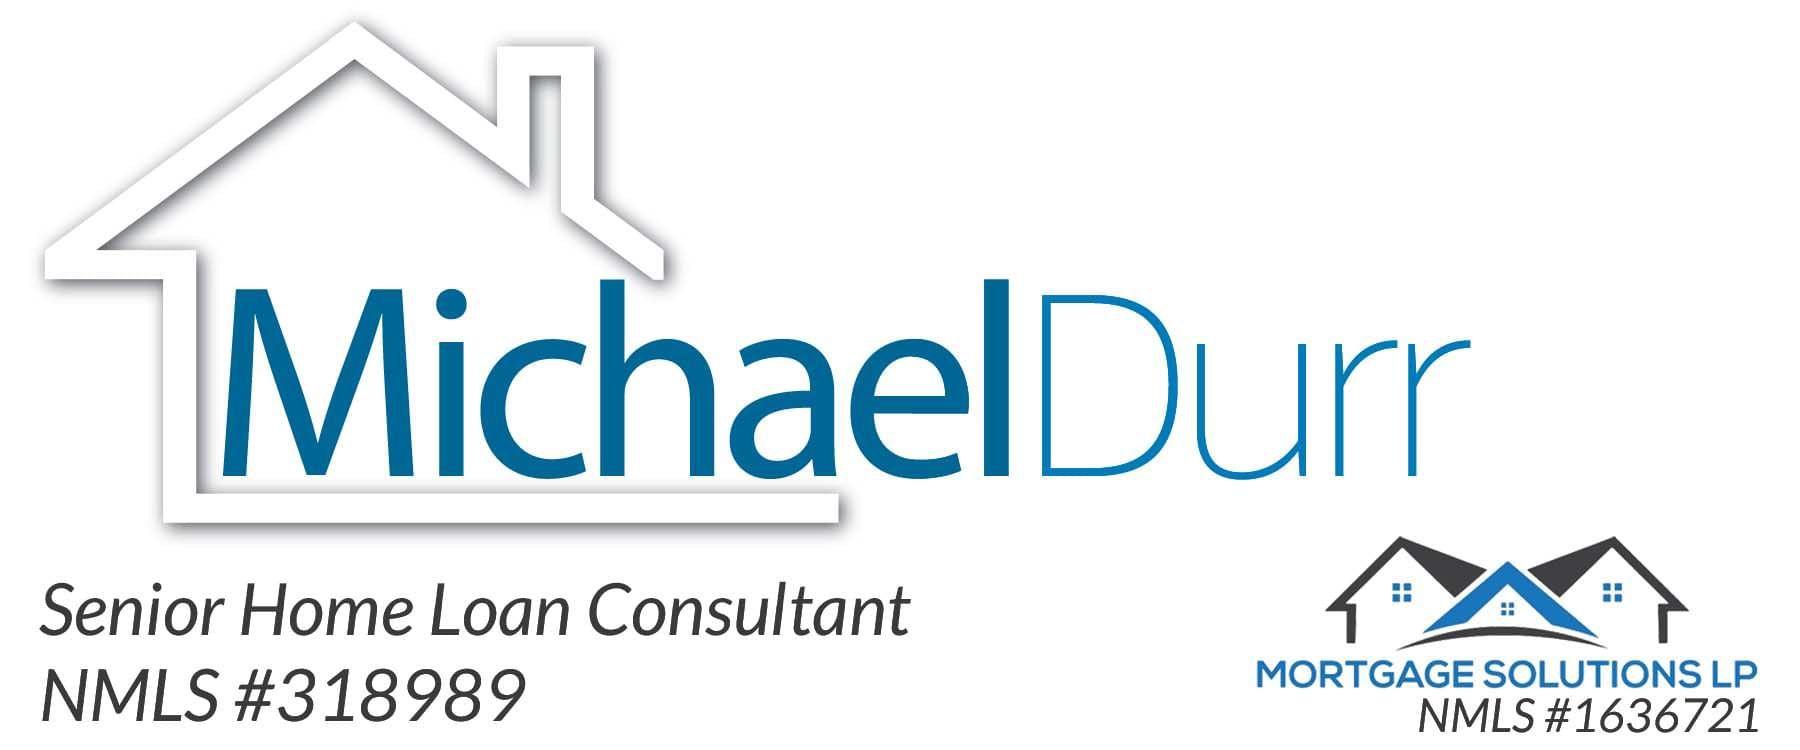 Durr Logo - Michael Durr, Providing Low Rate No Hassle Mortgages